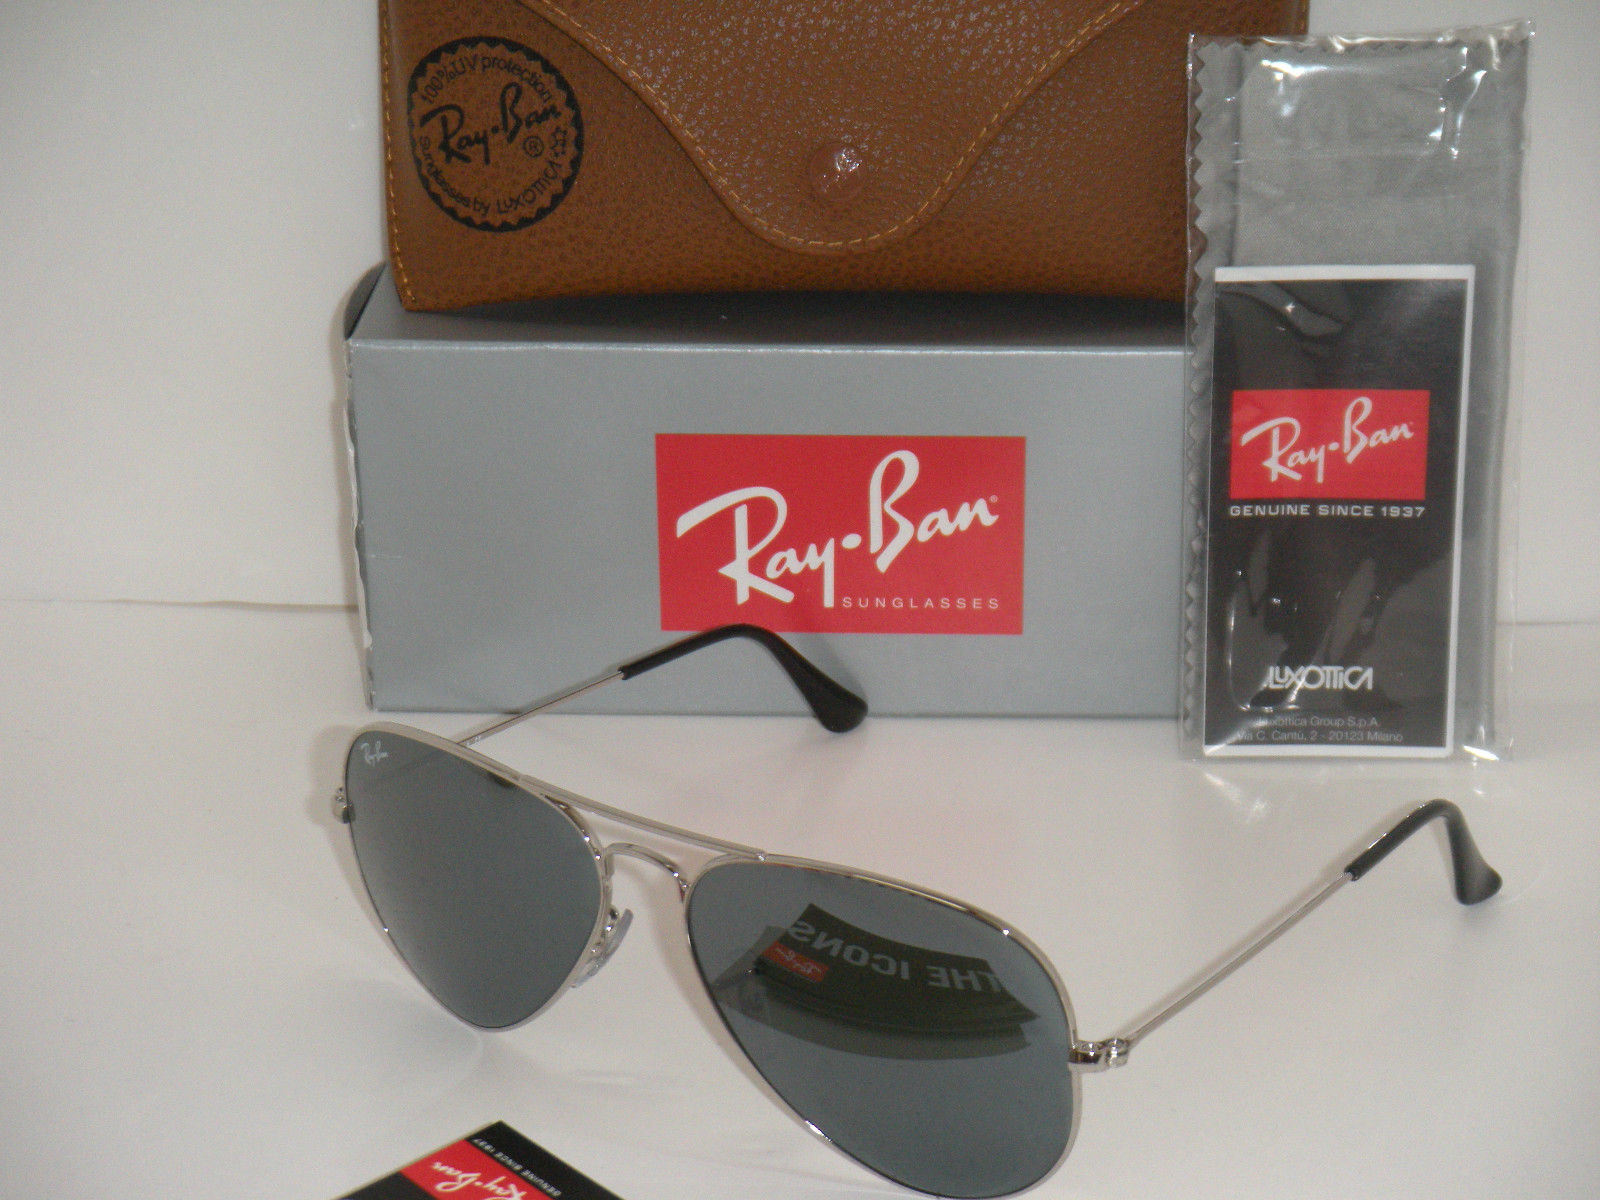 Authentic Ray-Ban Aviator Sunglasses - High Impact Coffee